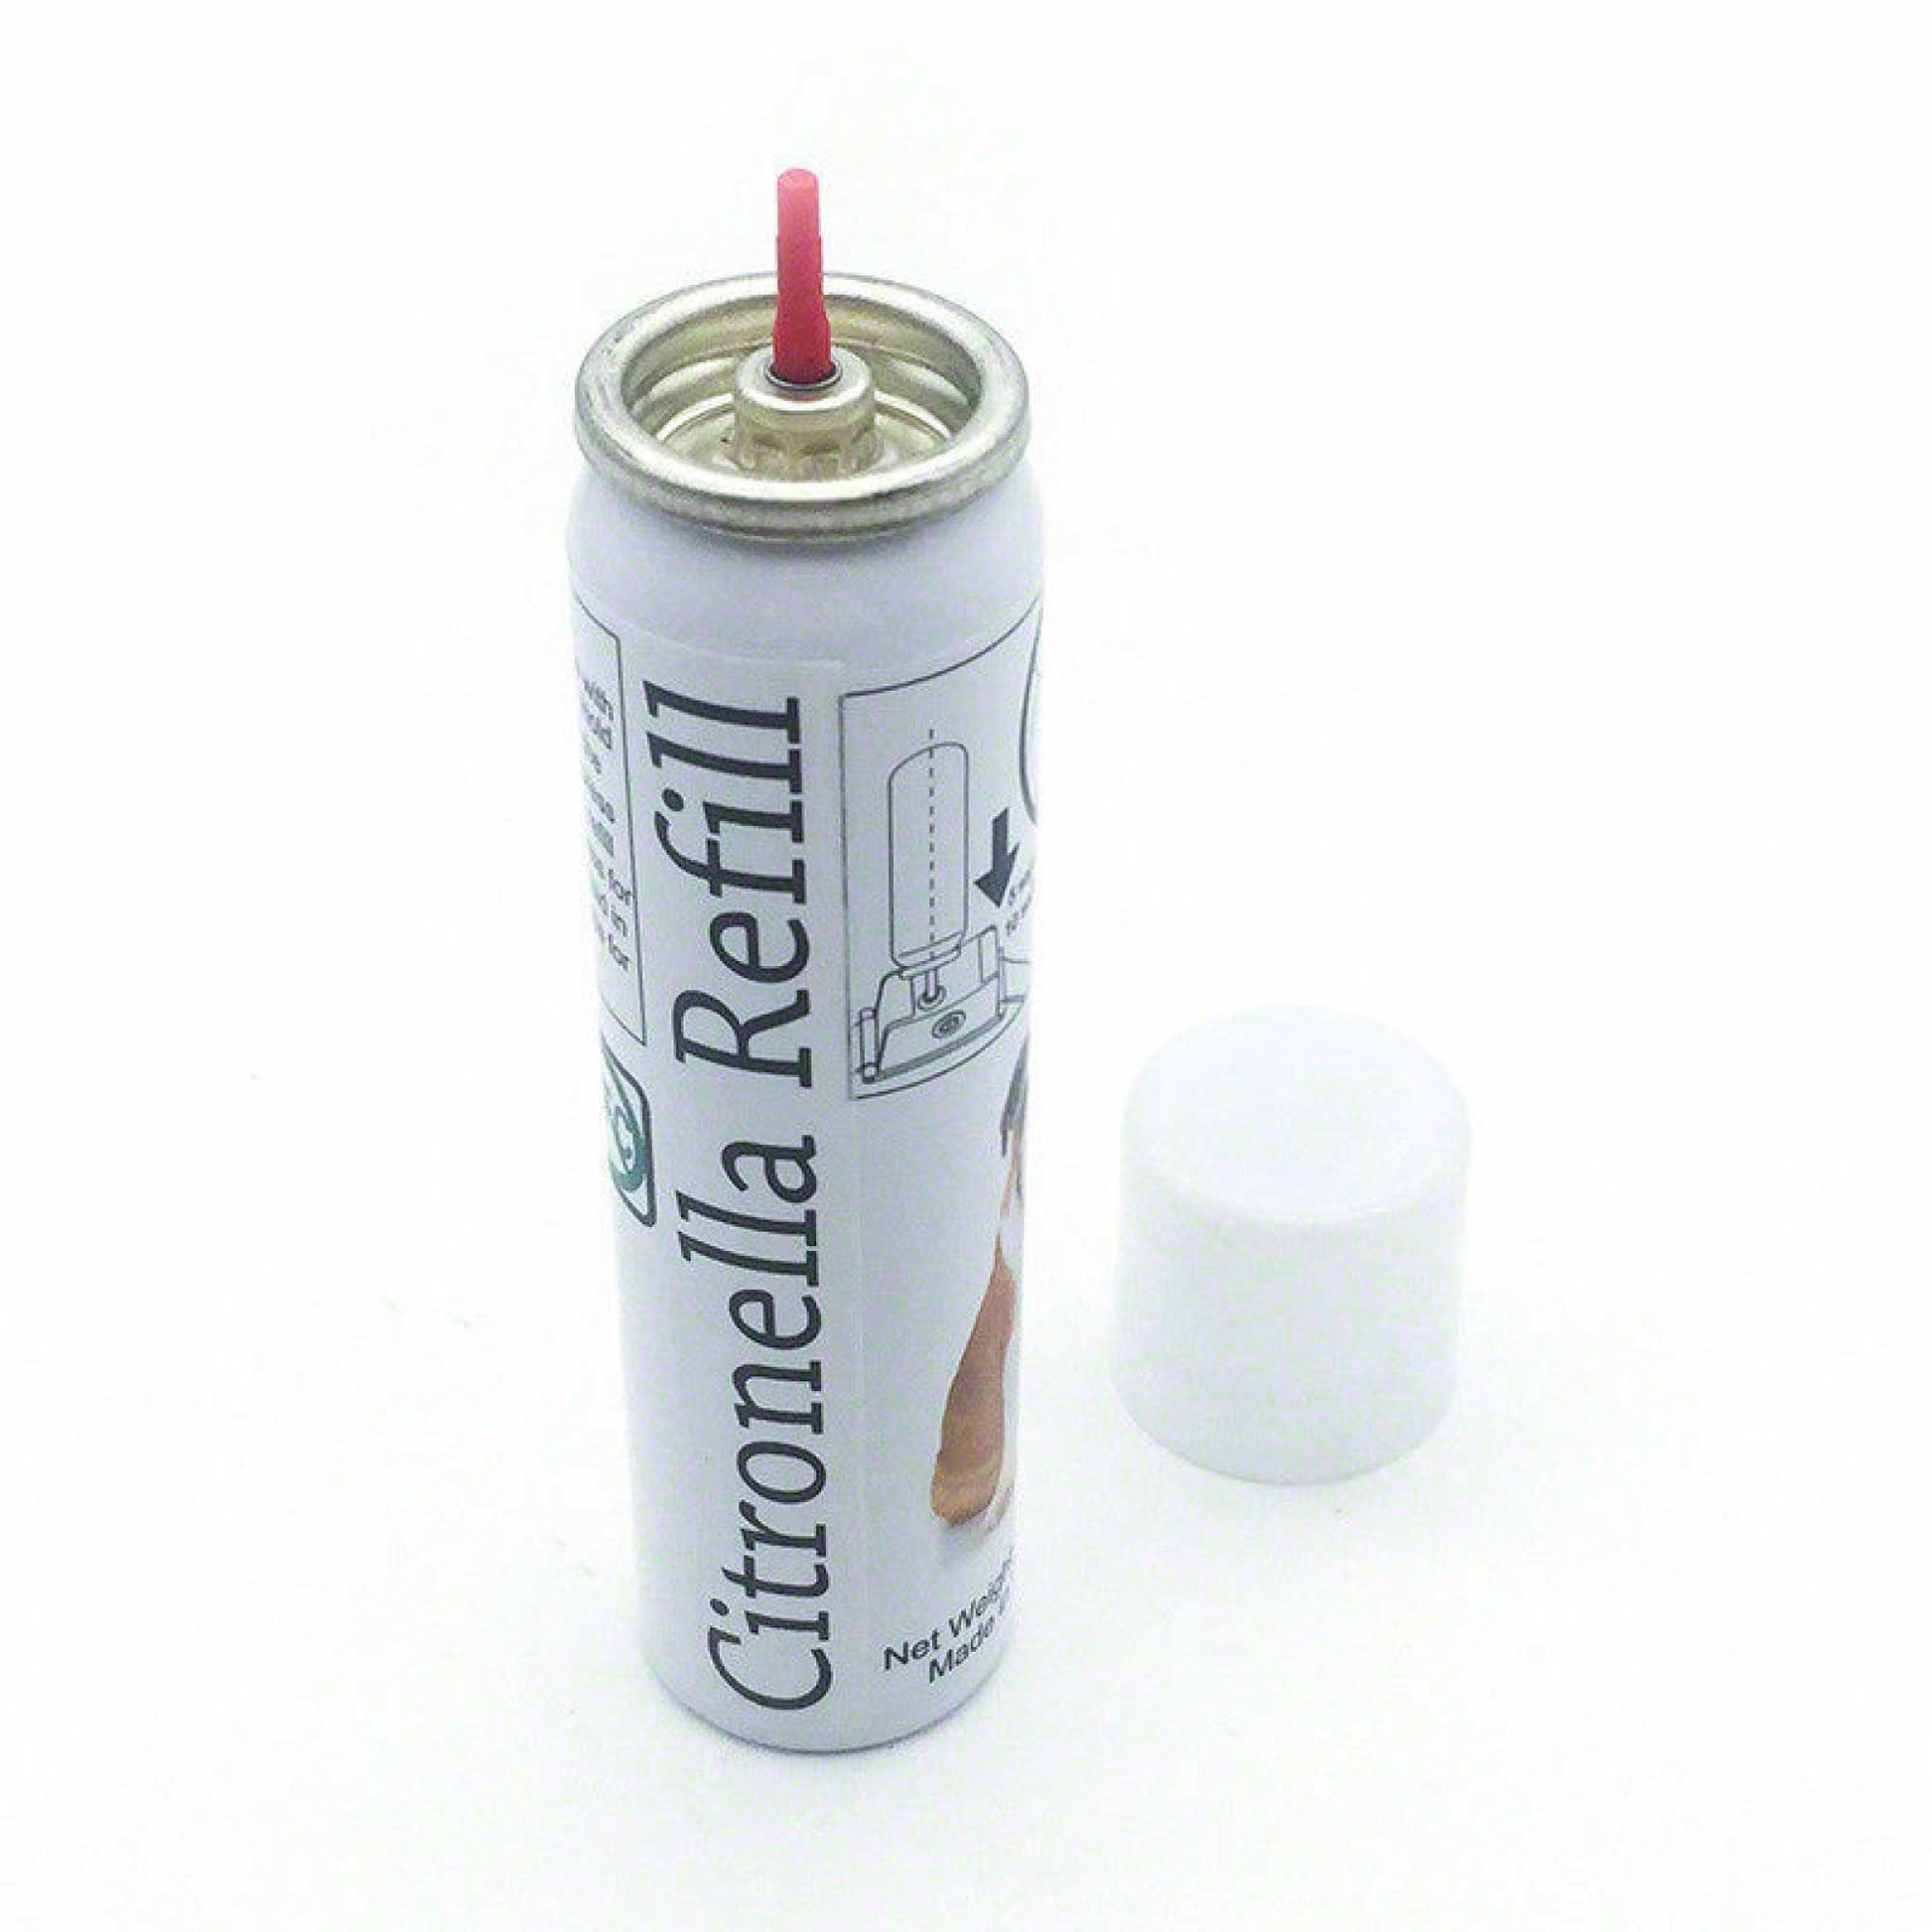 85g Citronella Spray Refill Cans For Bark Training Dog Collars - Bulk Buy